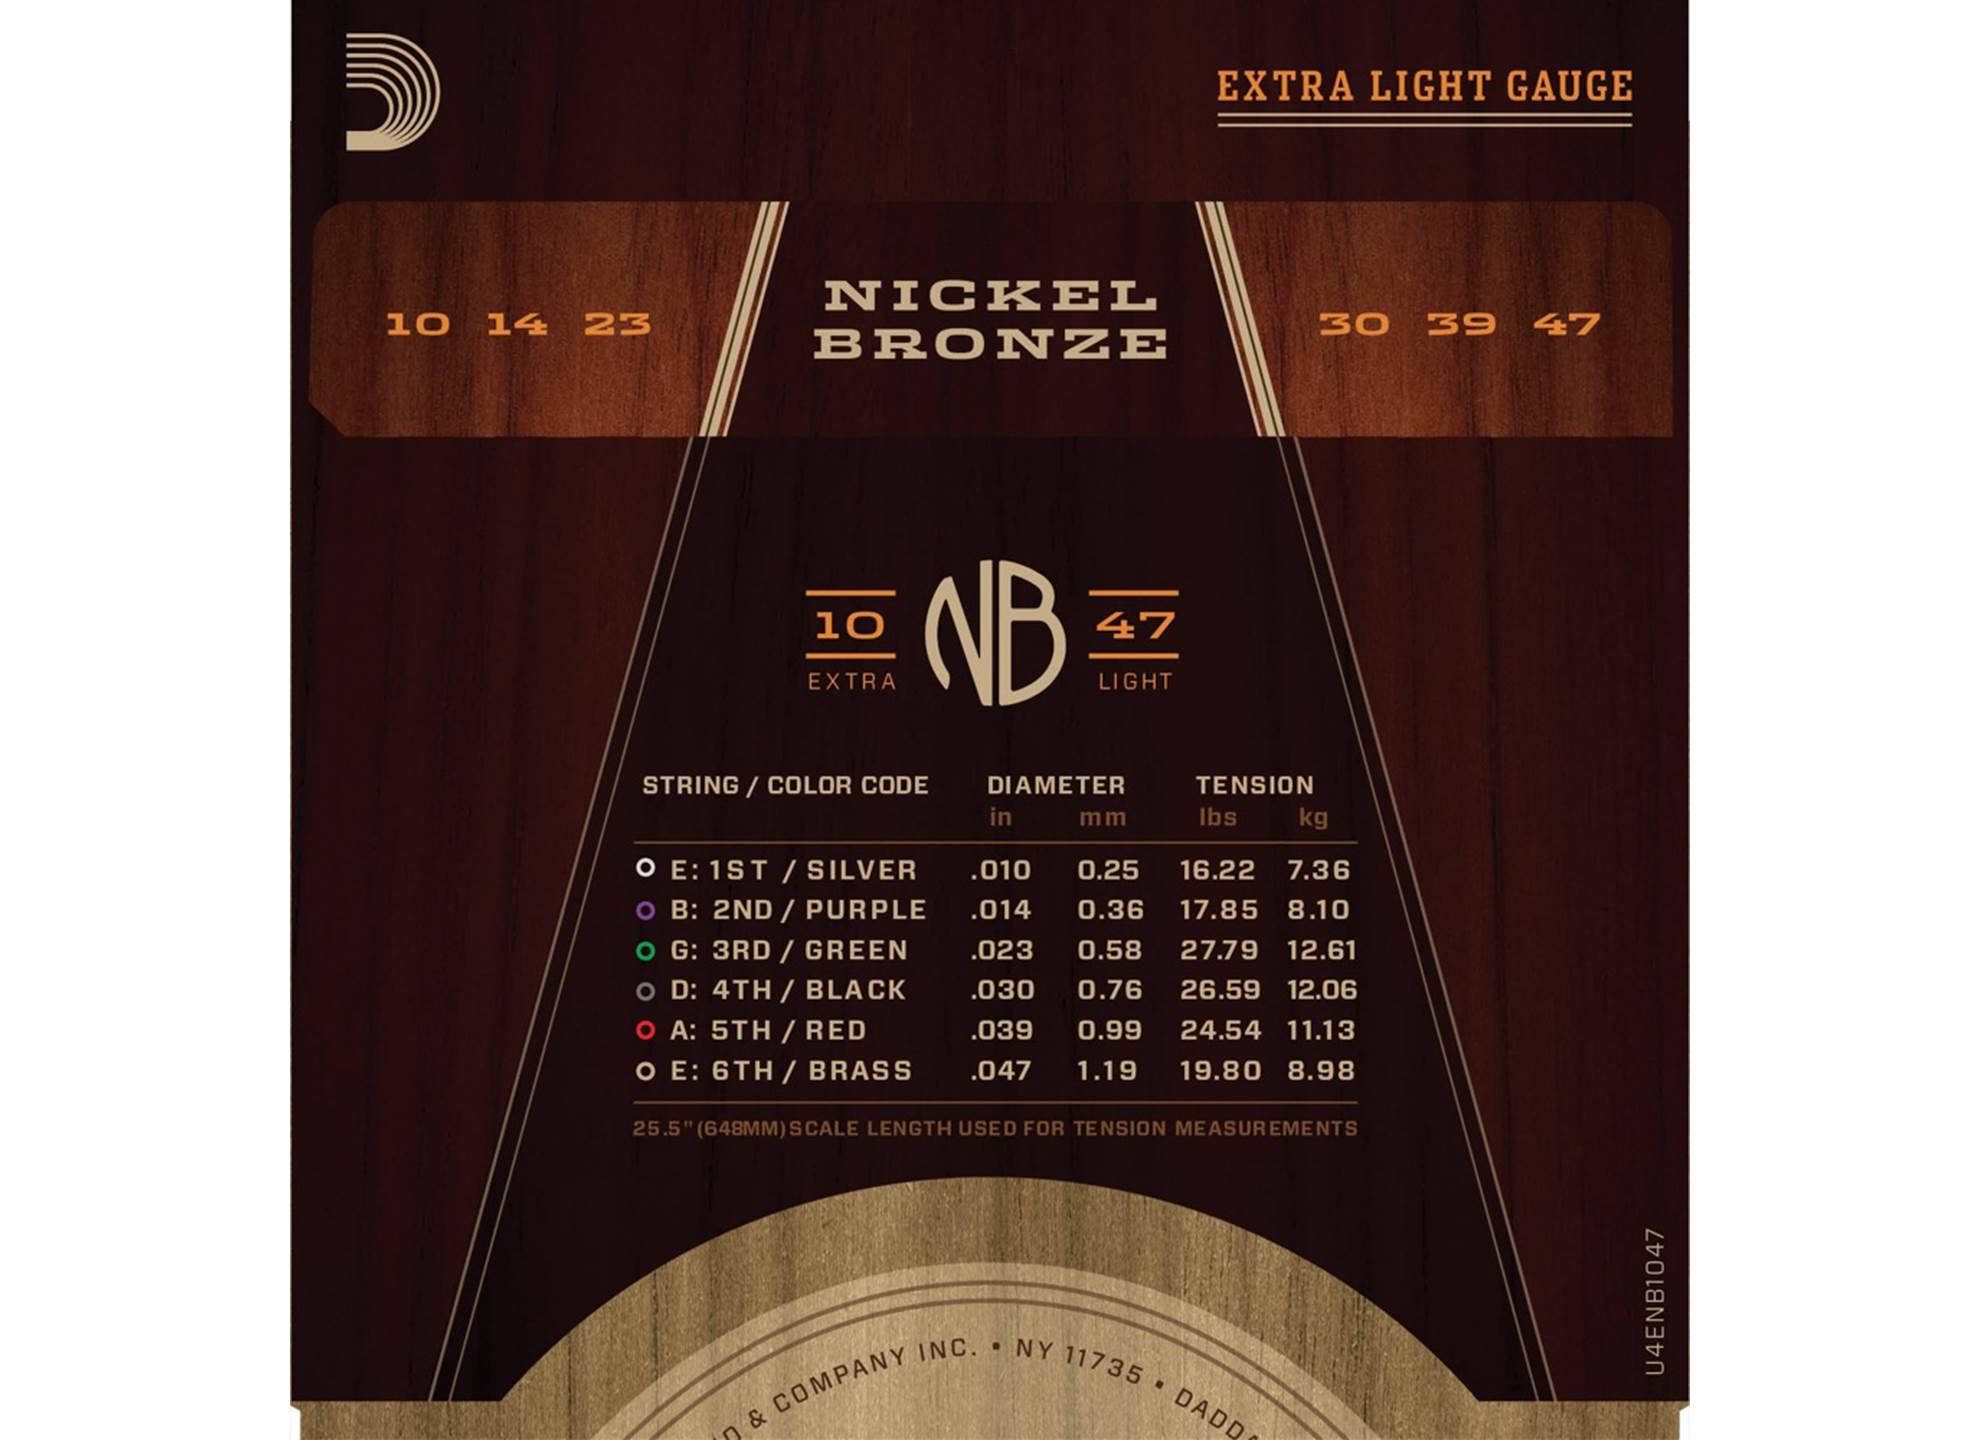 NB1047 Nickel Bronze 10-47 Extra Light